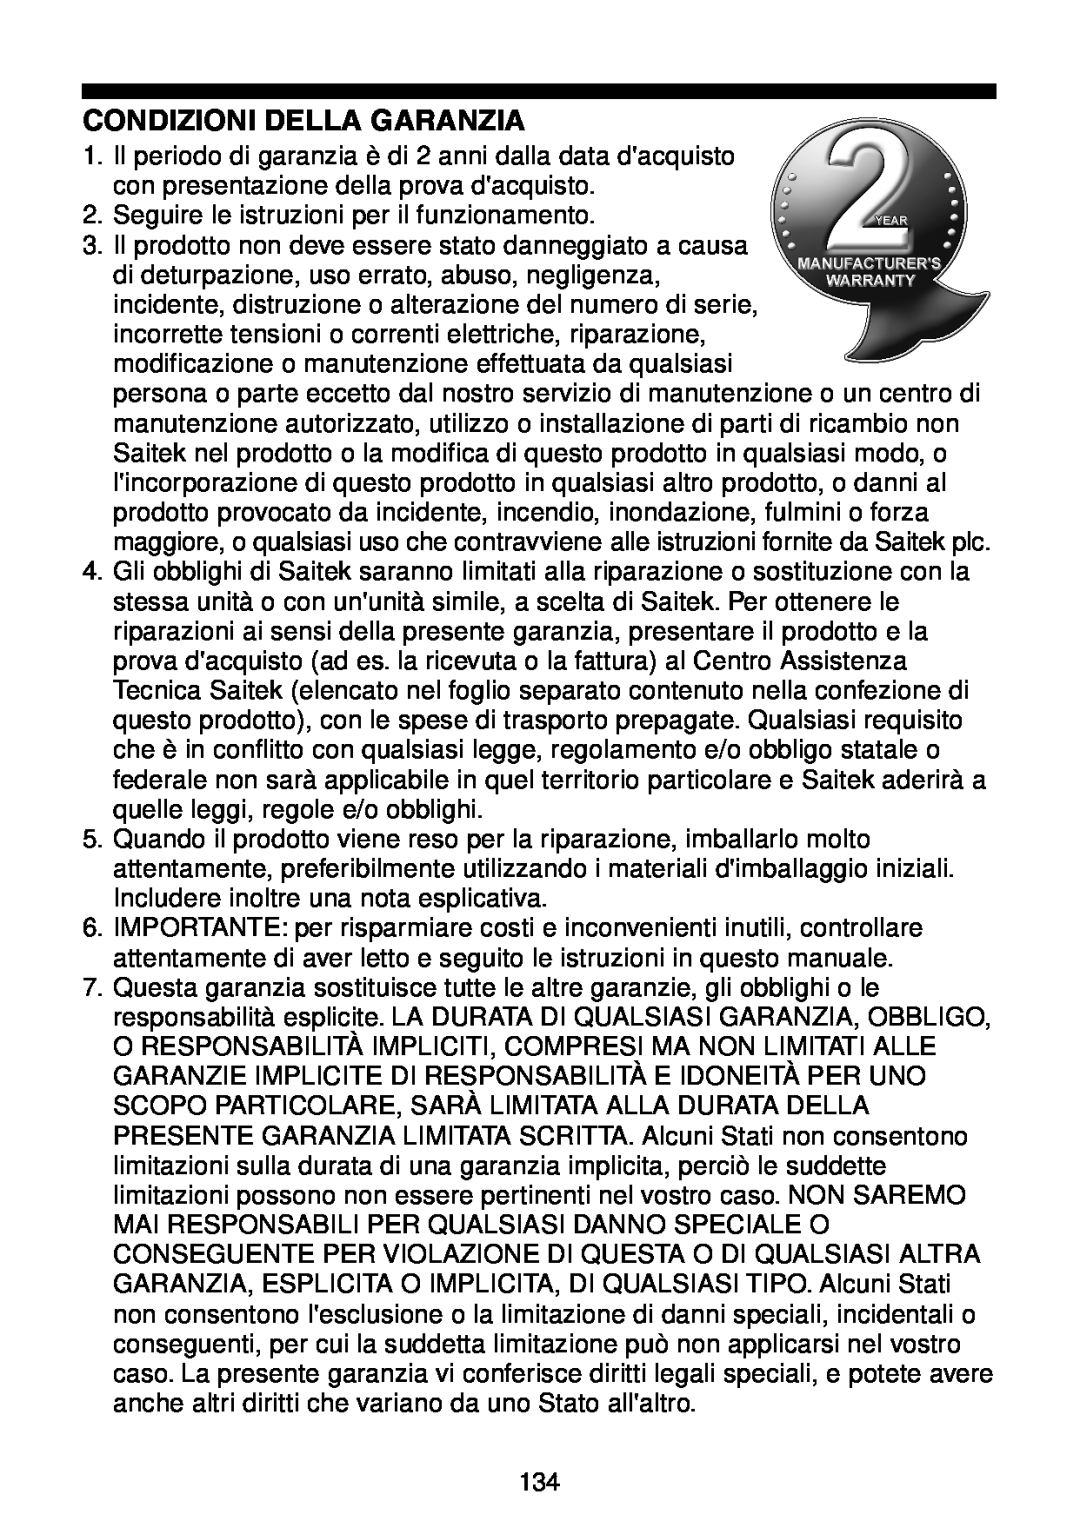 Saitek Maestro Travel Chess Computer manual Condizioni Della Garanzia 